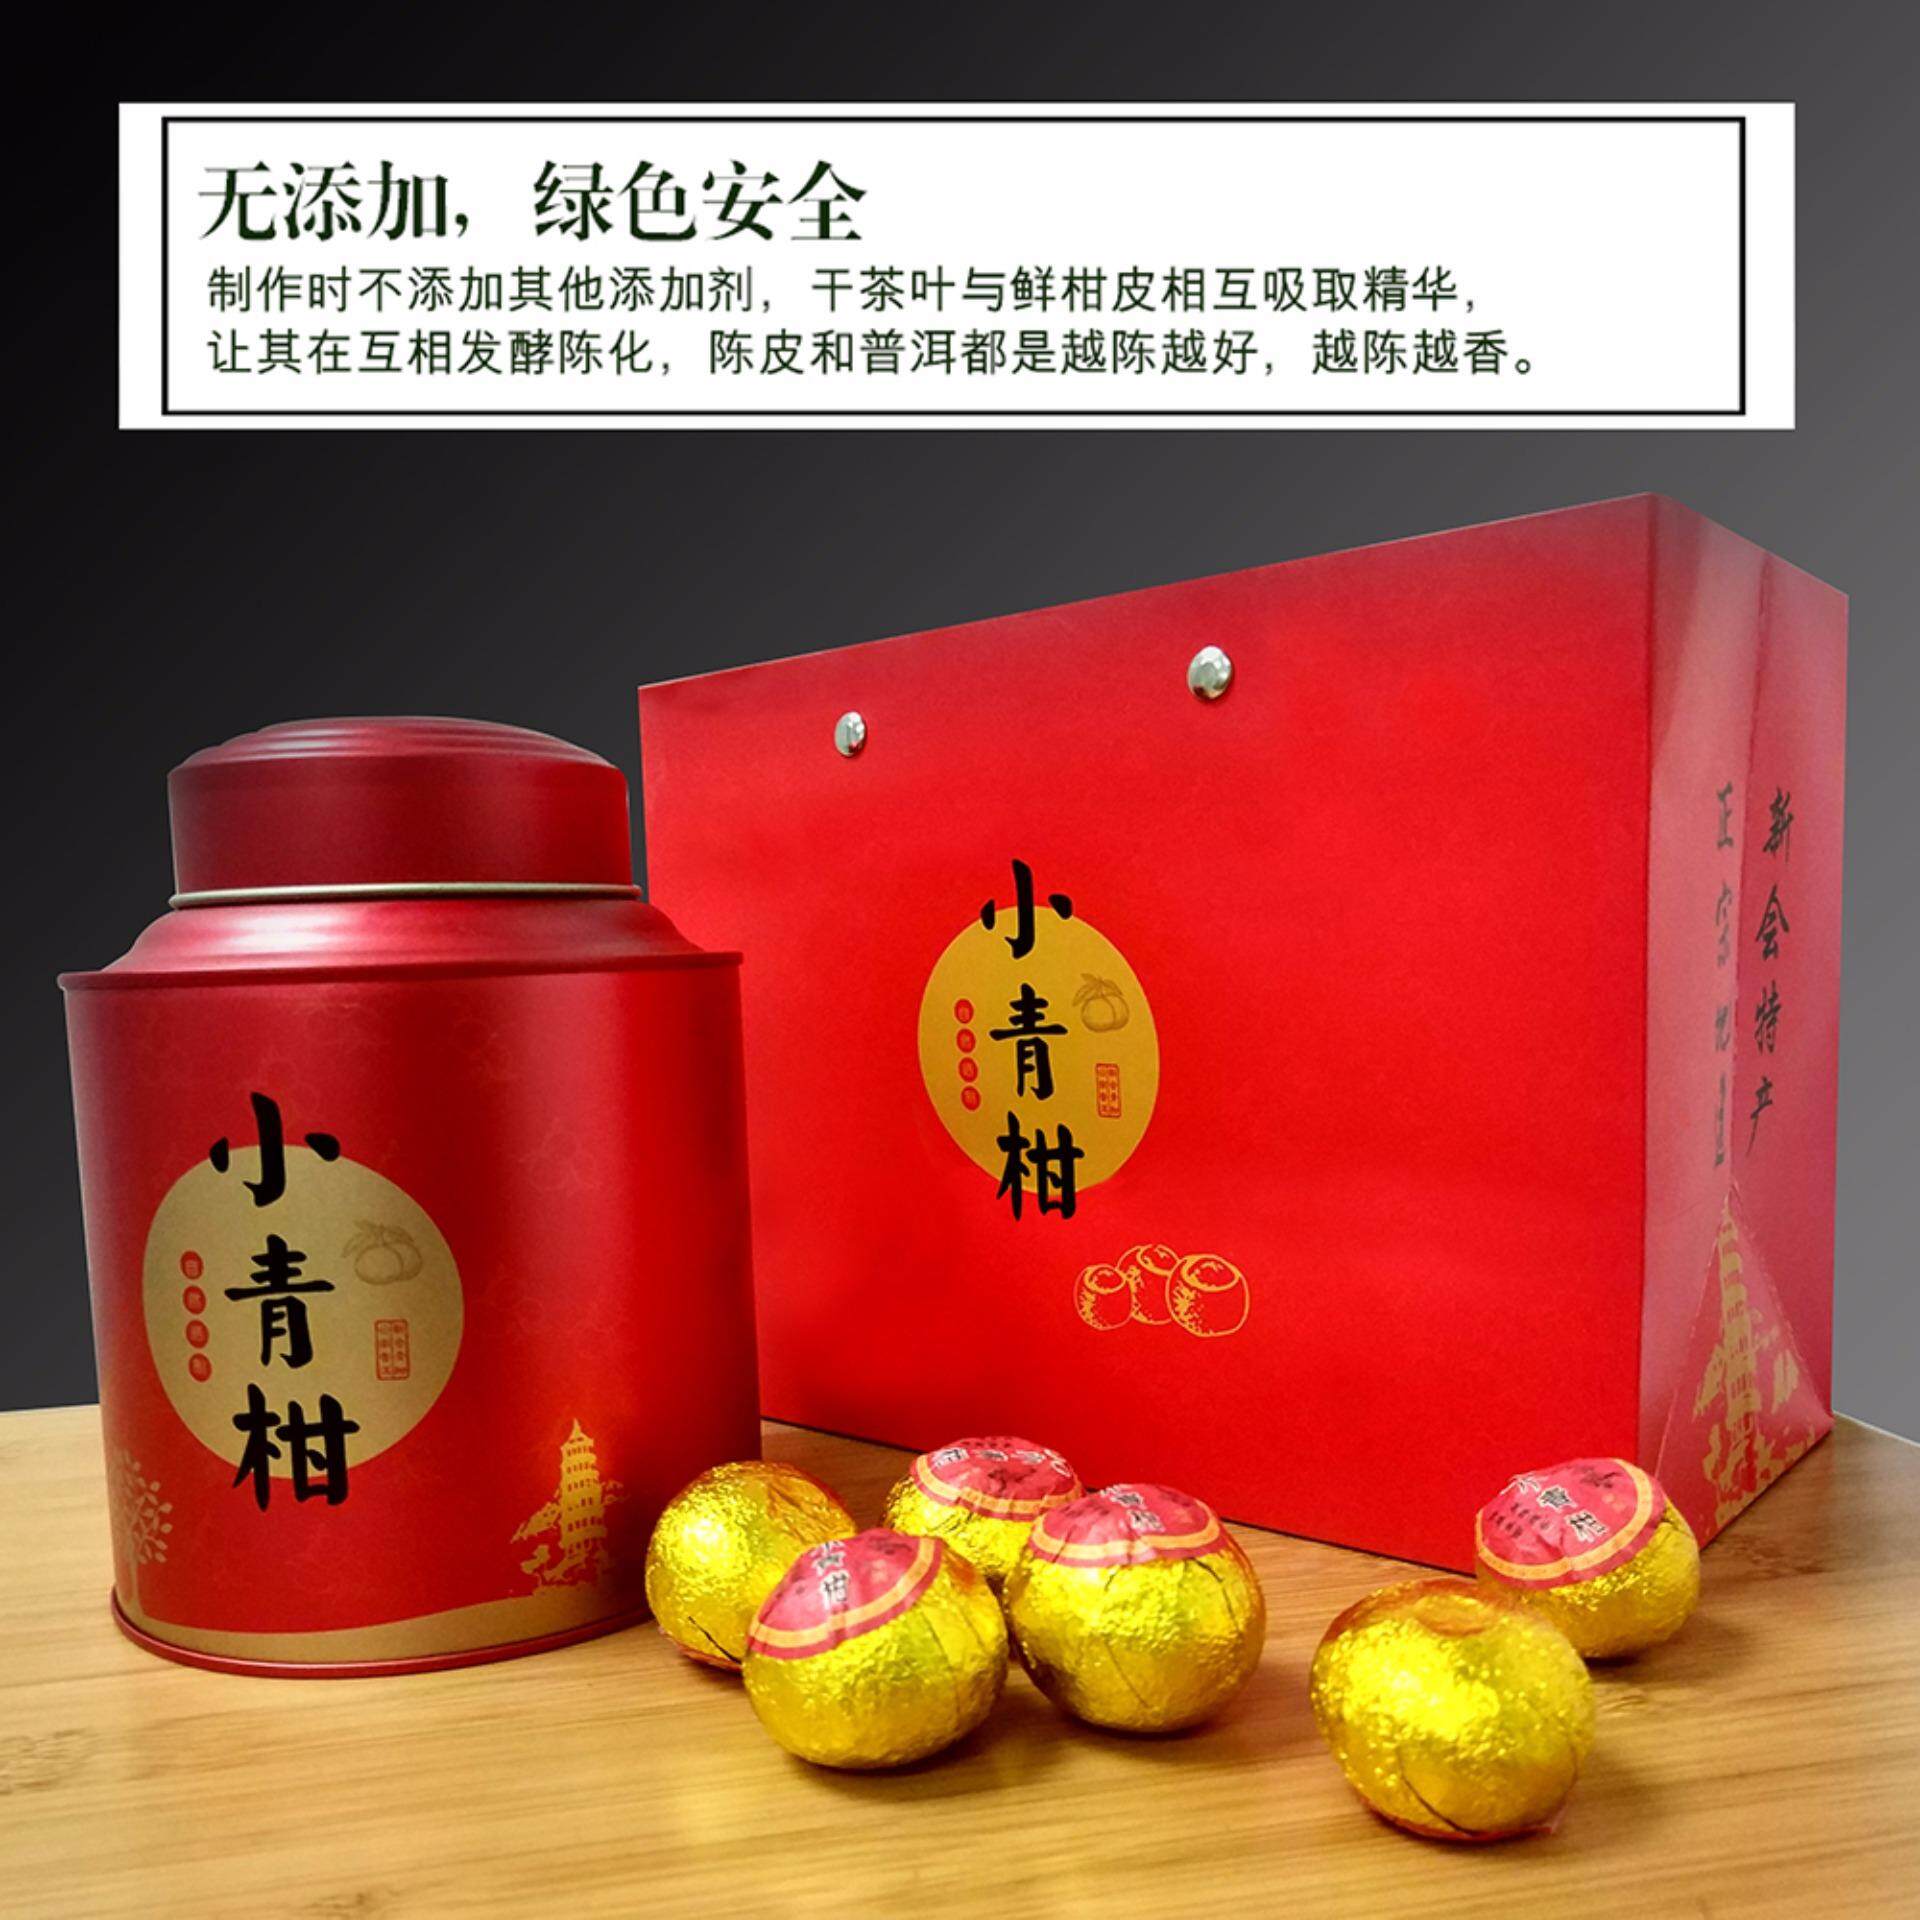 Chinese Tea High Grade Xin Hui Golden Chinese dark tea Pu-erh dried Green Mandarin Orange Gift Collection (250g)